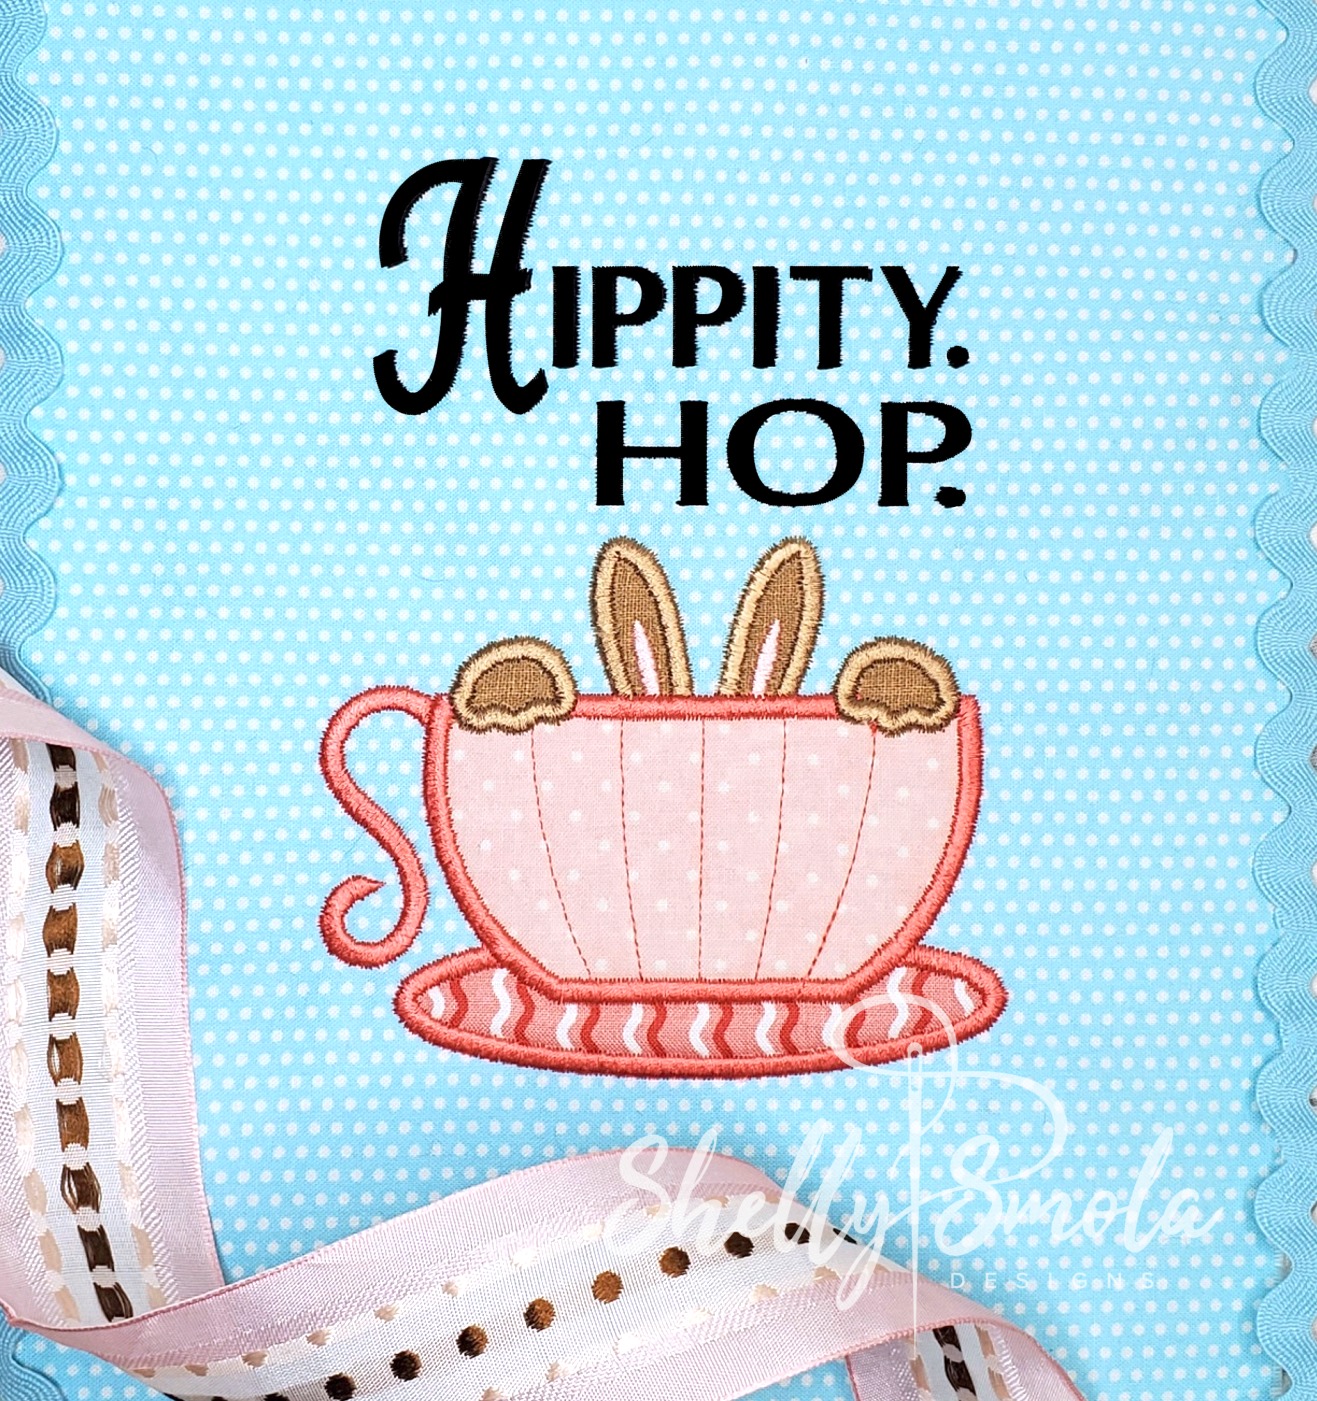 Hippity Hop by Shelly Smola